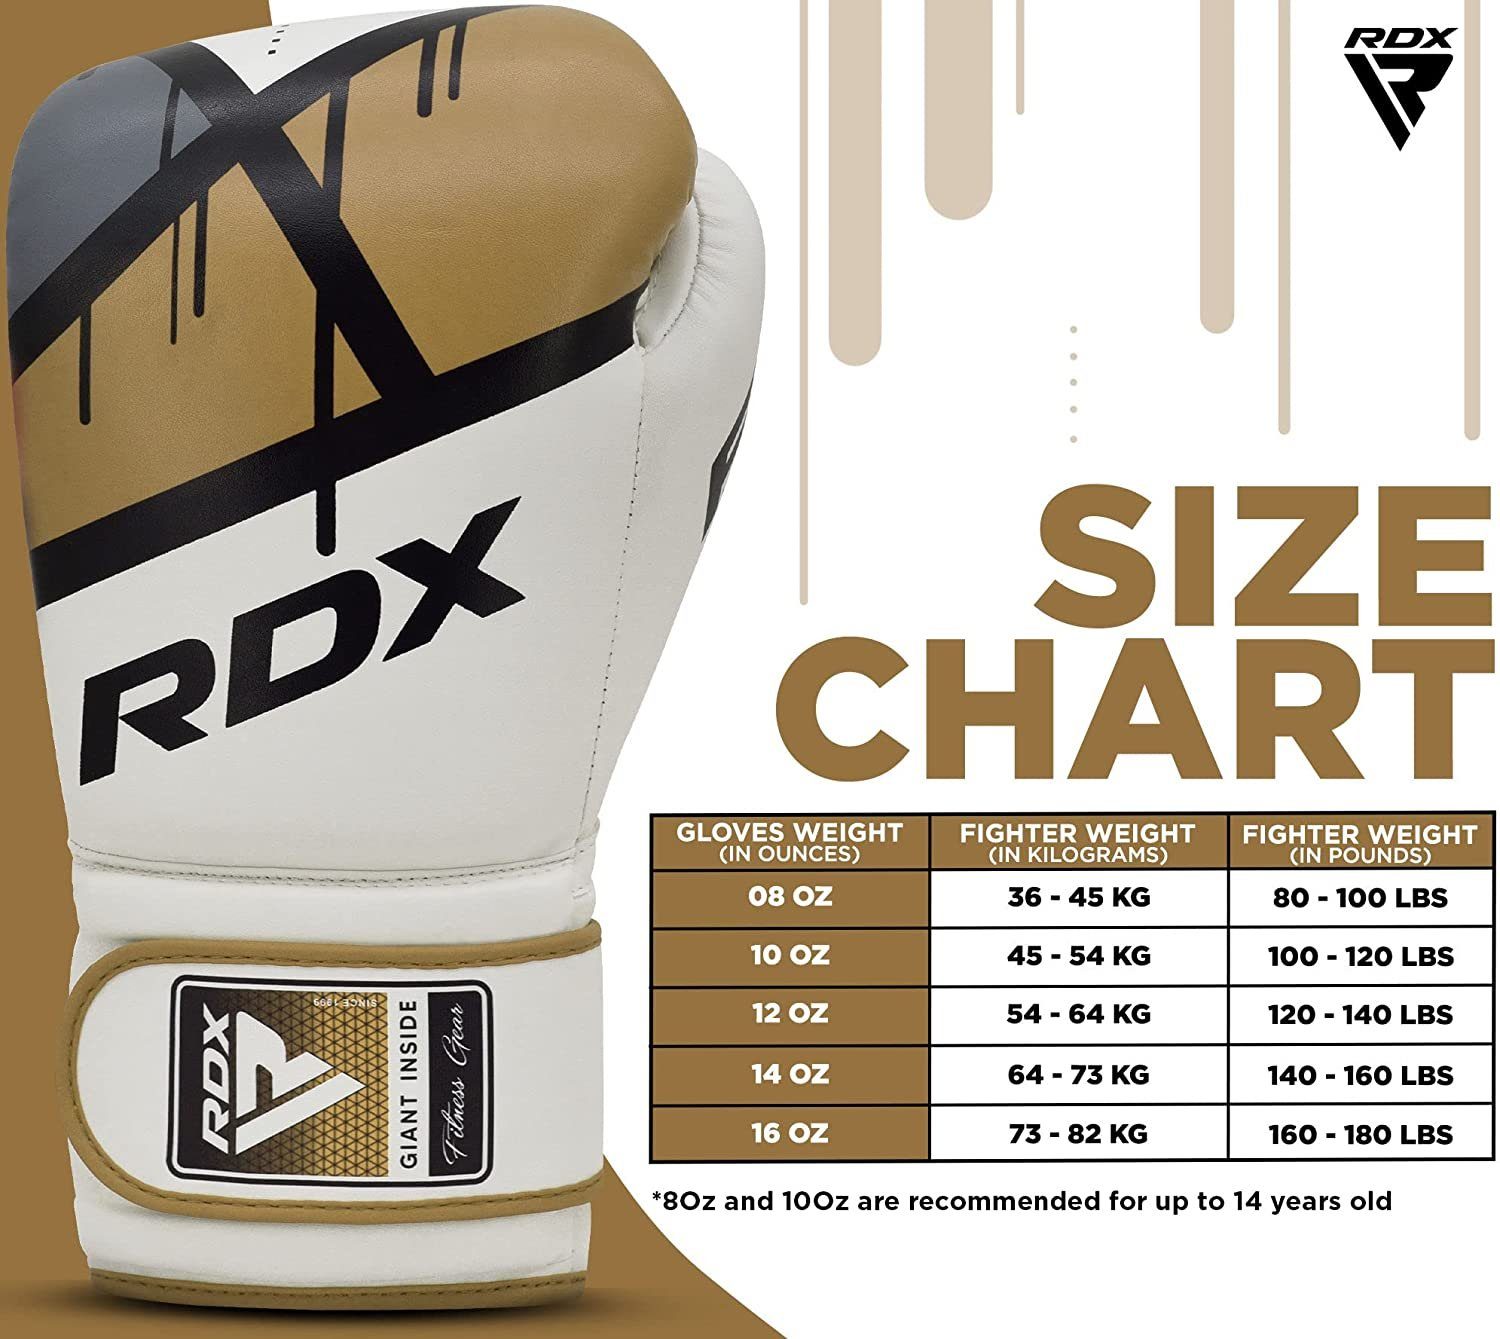 Thai Boxsack Kickboxing Boxhandschuhe Golden Sparring RDX RDX Muay Sports Training Boxhandschuhe